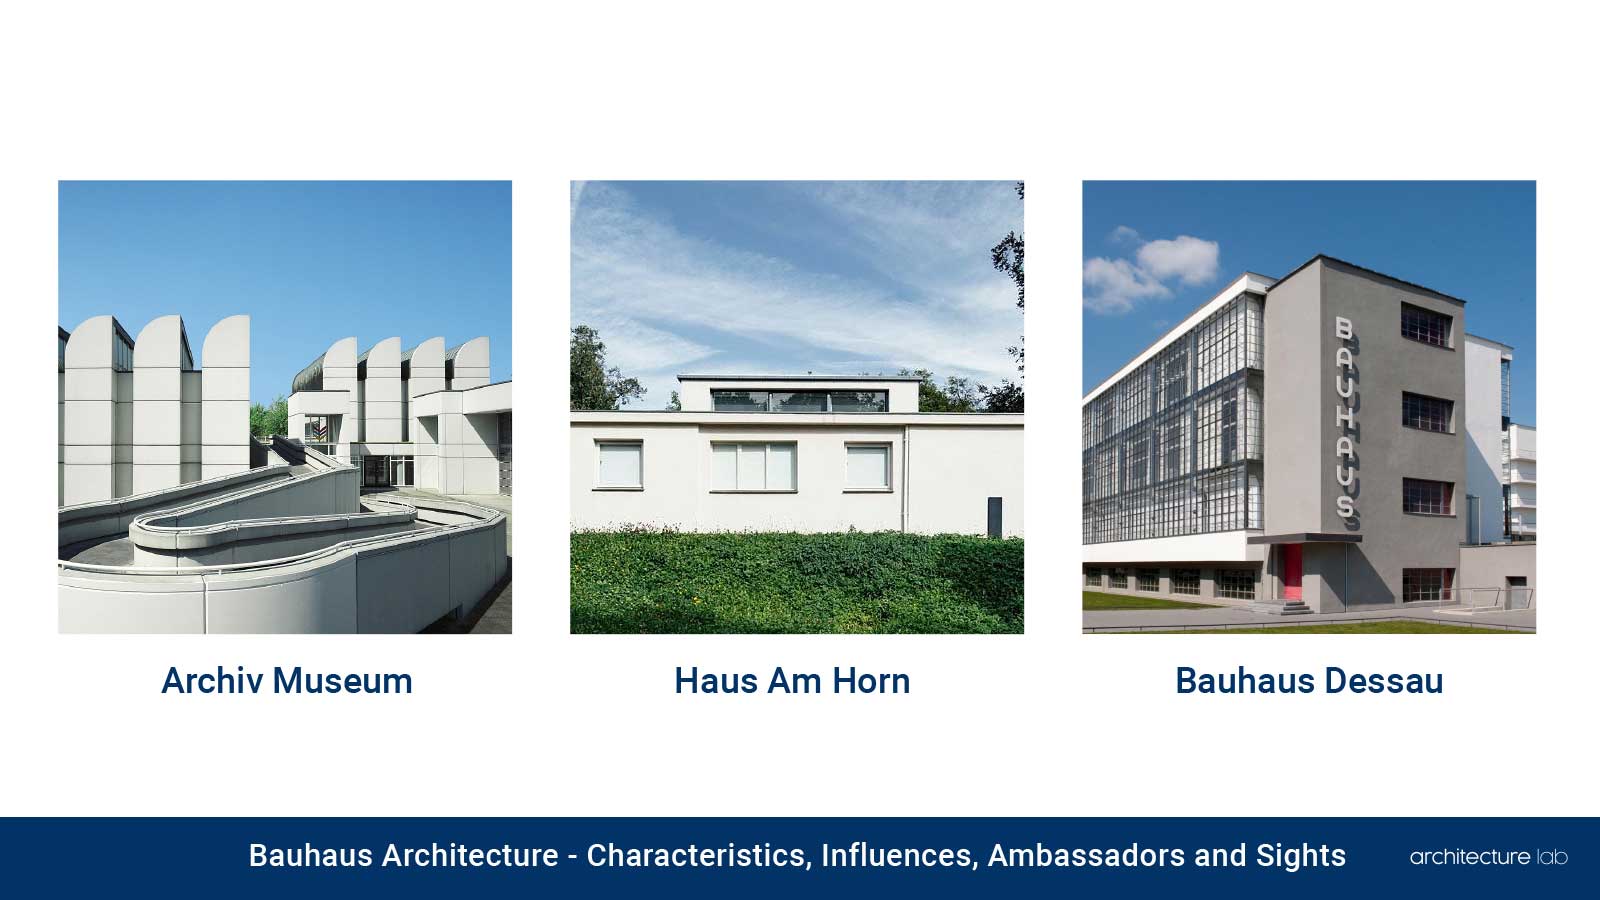 Bauhaus architecture: characteristics, influences, ambassadors and sights